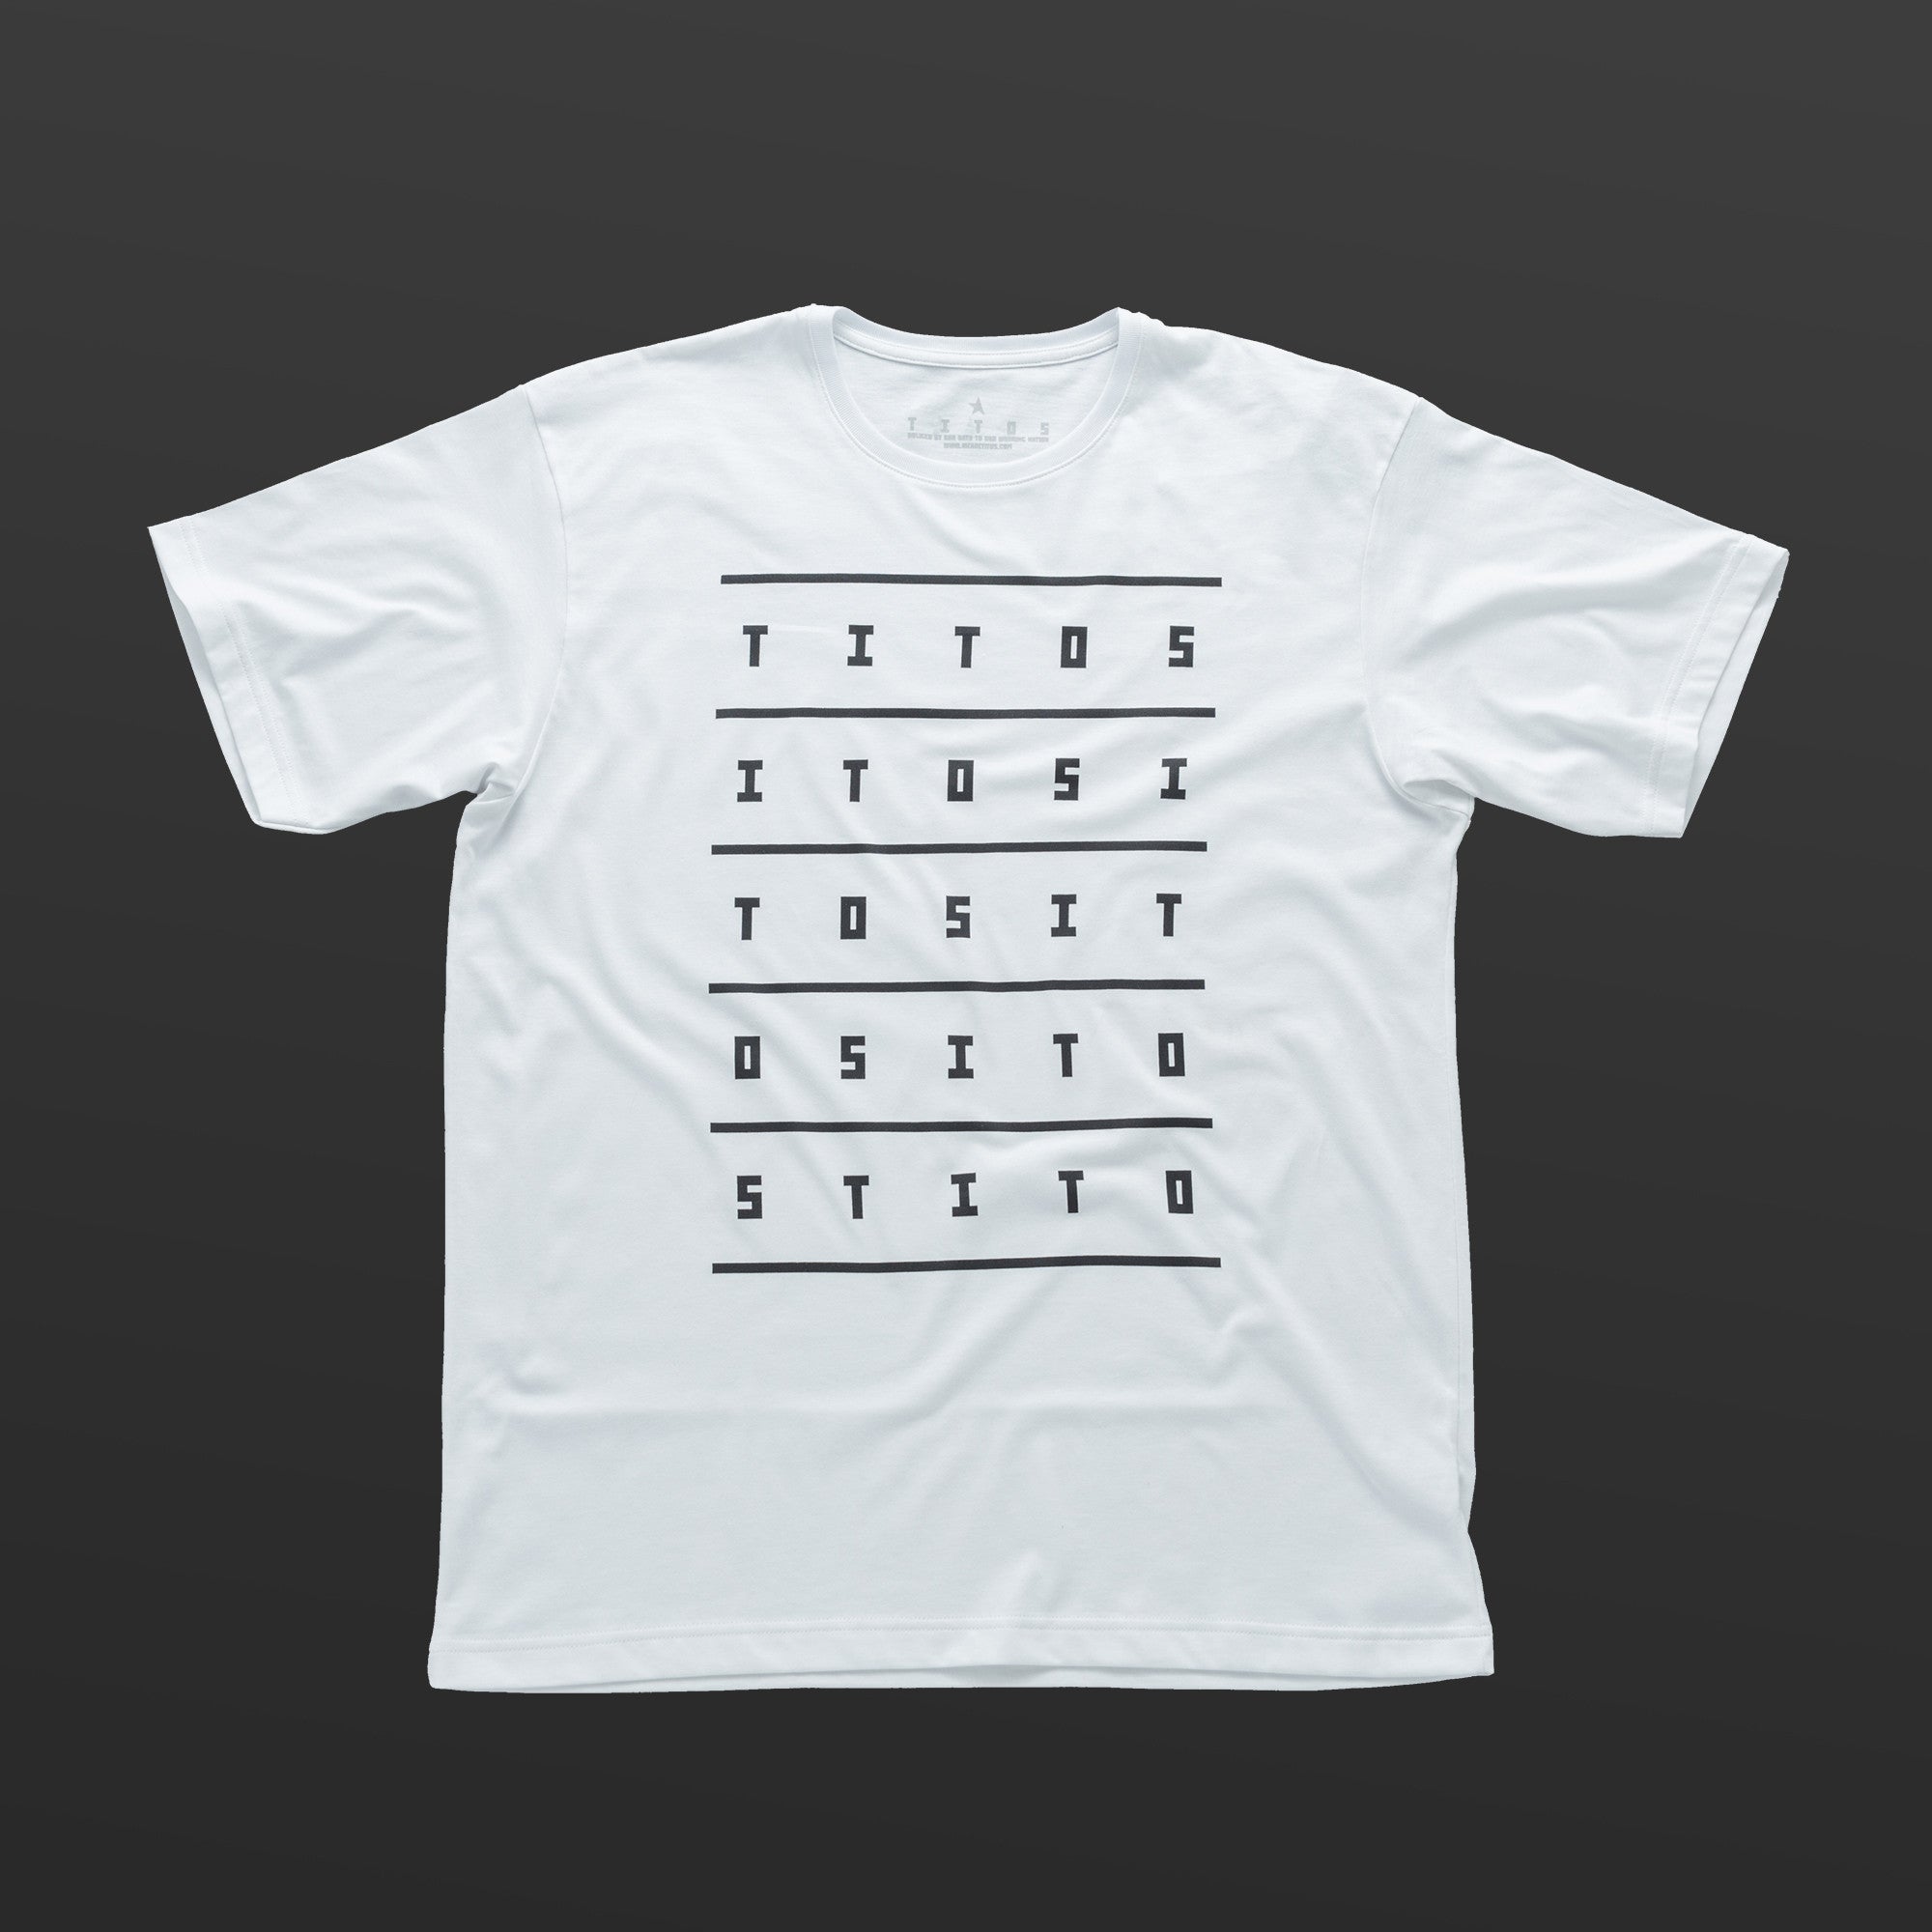 Second T-shirt white/black TITOS 5X5 letters